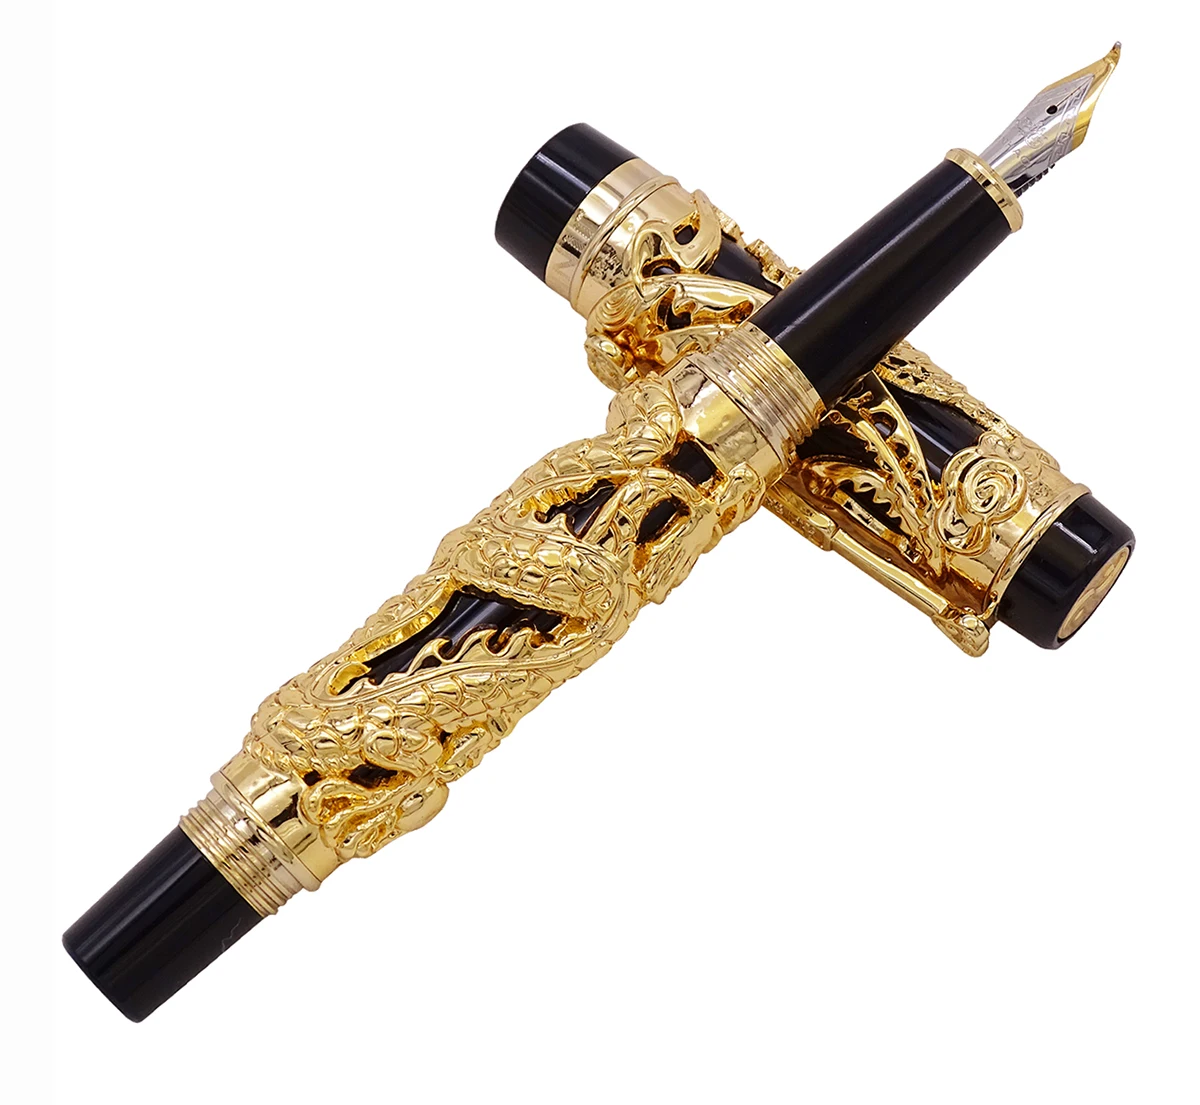 

Jinhao Dragon Phoenix Vintage Luxury Calligraphy Pen Fountain Pen Bent Nib Full Metal Golden & Black Carving for Art Office Gift